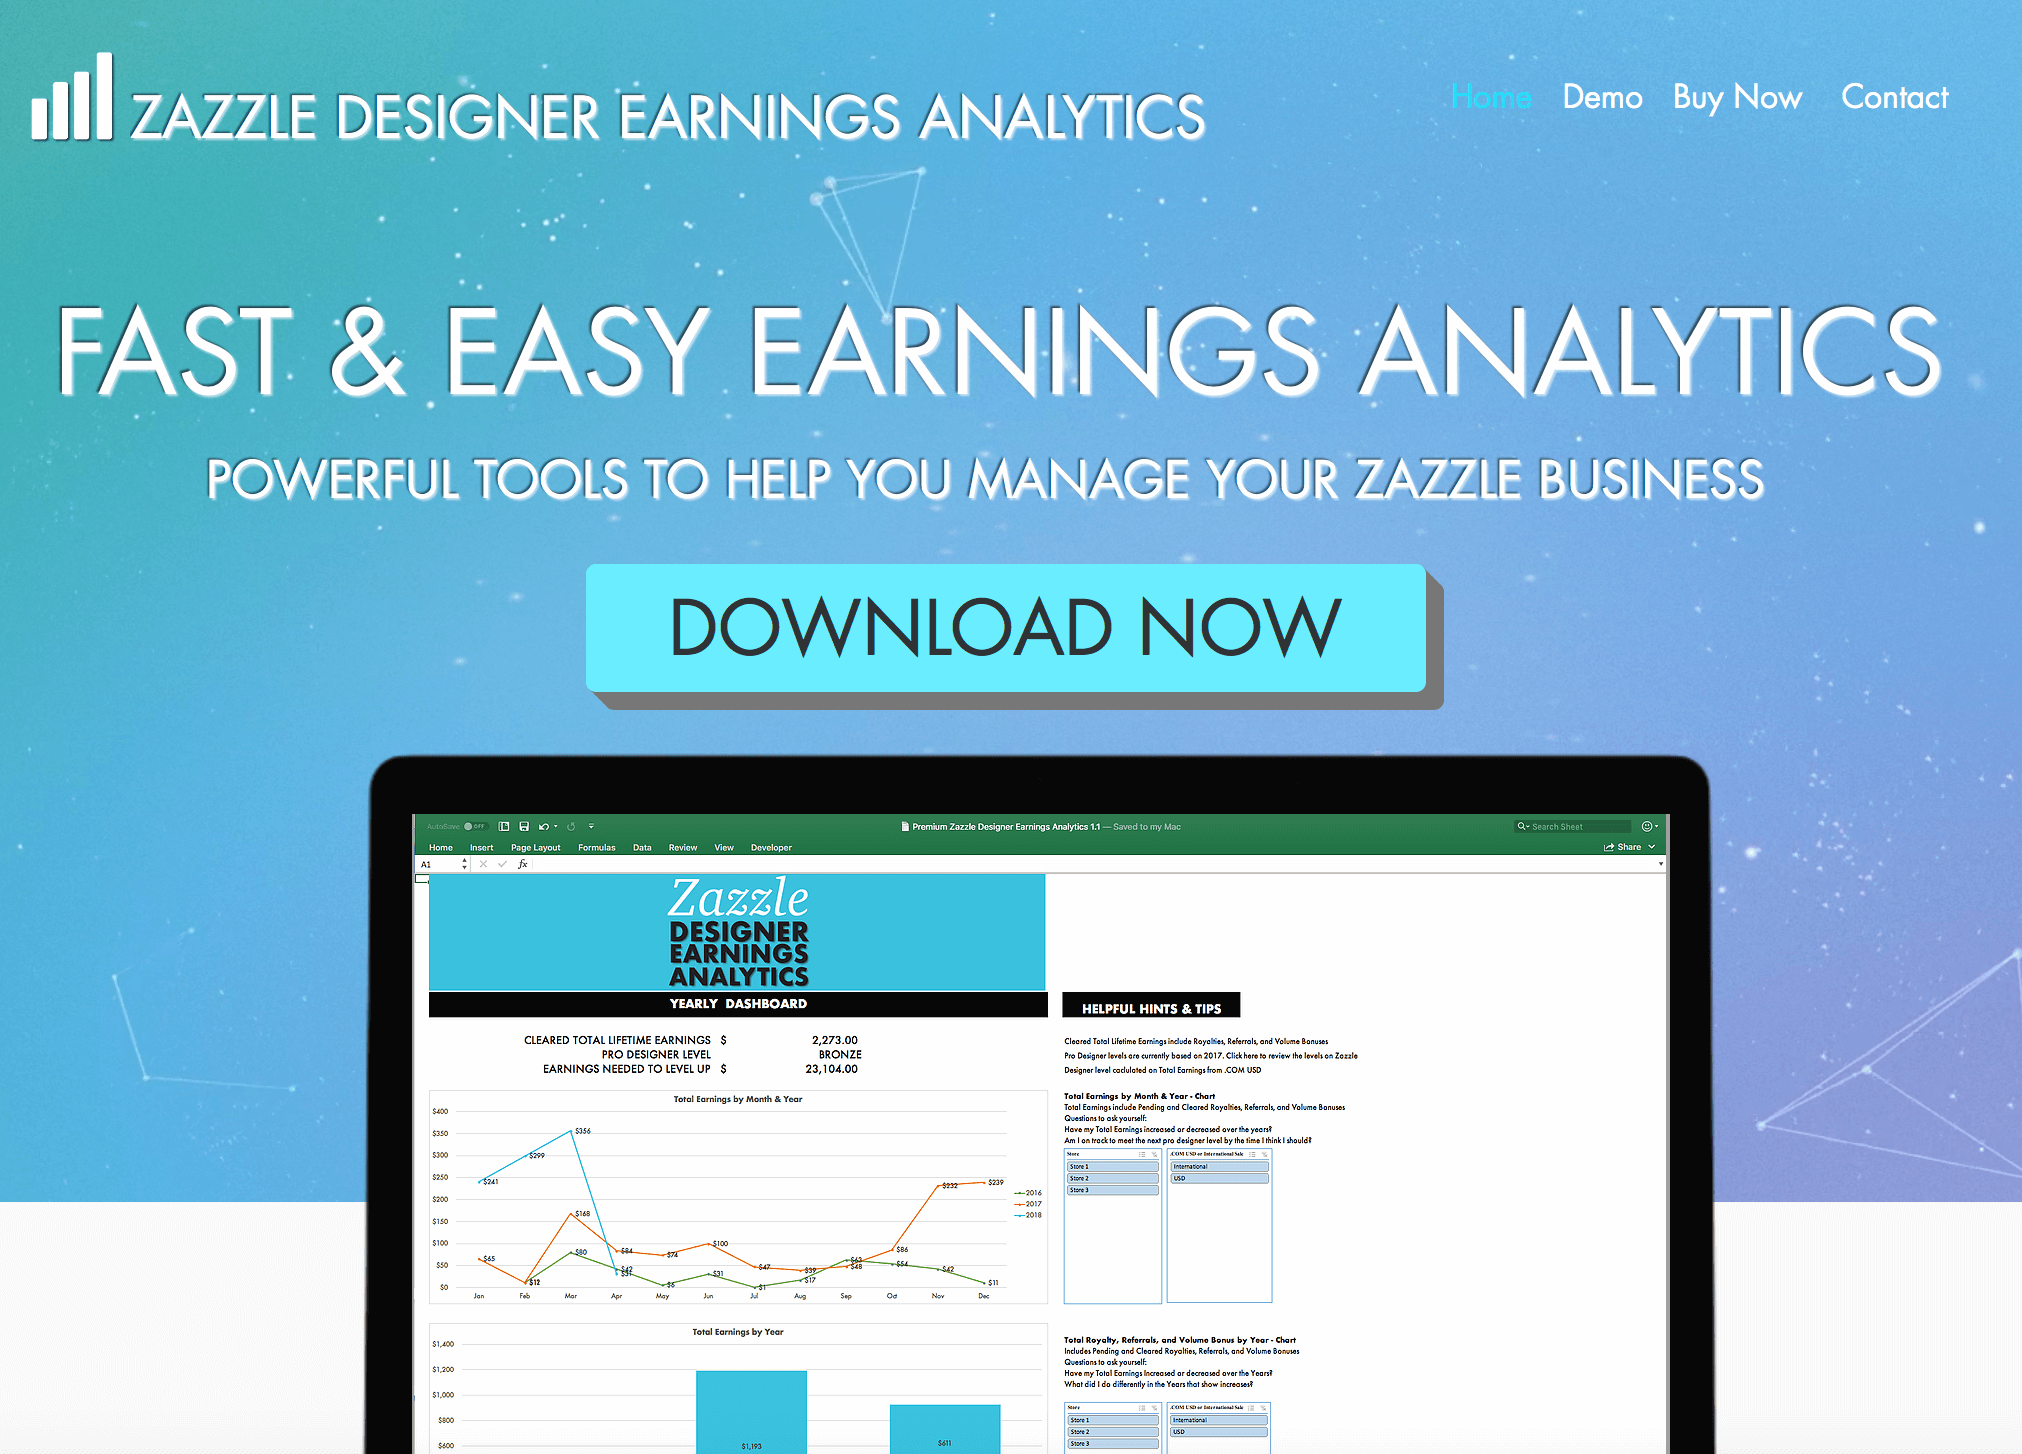 Making money on Zazzle: Zazzle Designer Earnings Analytics Tool by Danielle Fernandez Sign Up Page